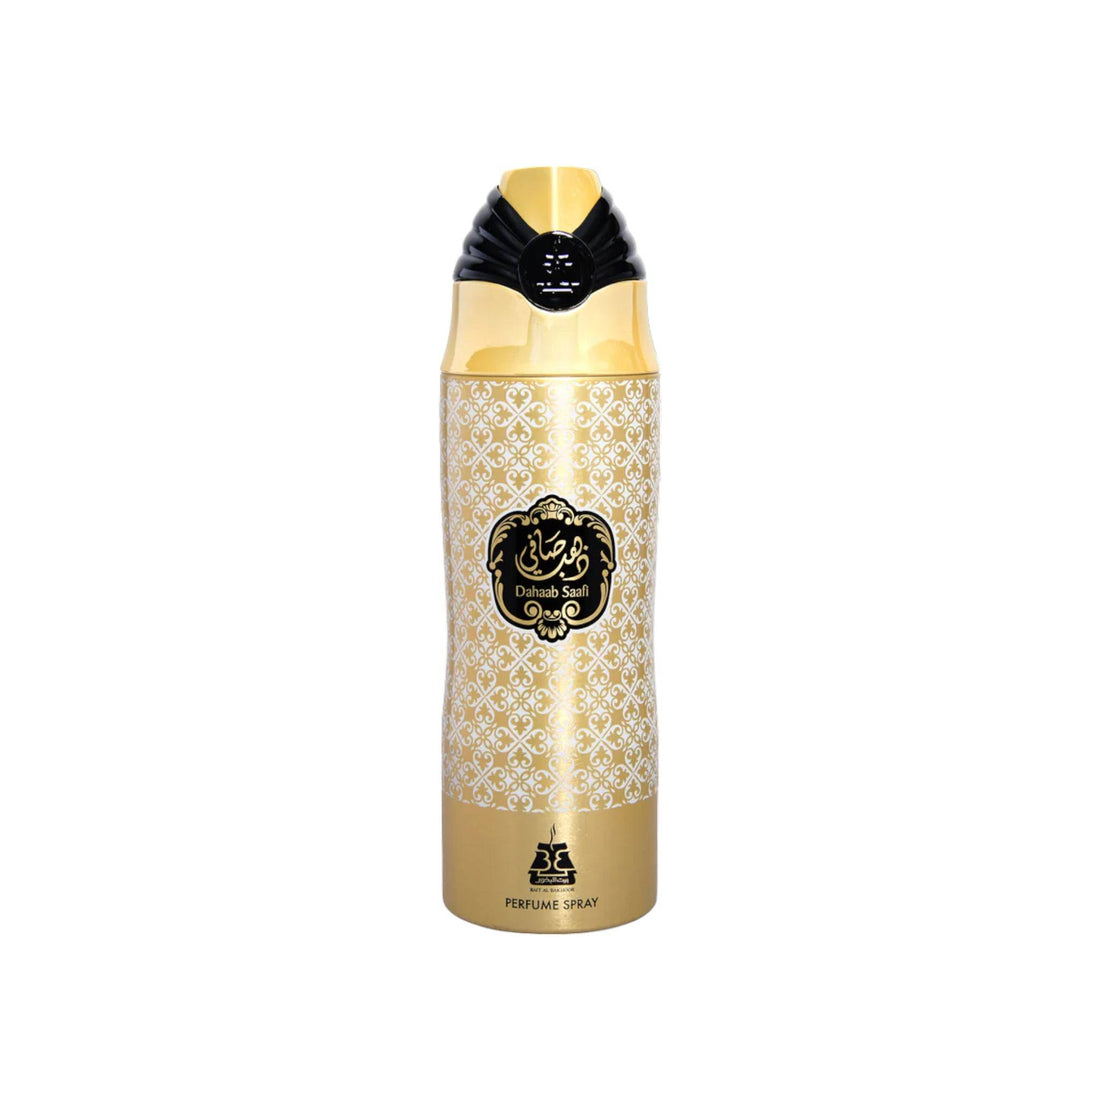 Luxurious 200ml bottle of Bait Al Bakhoor Dahaab Saafi Deodorant, emphasizing its opulent and exotic design.